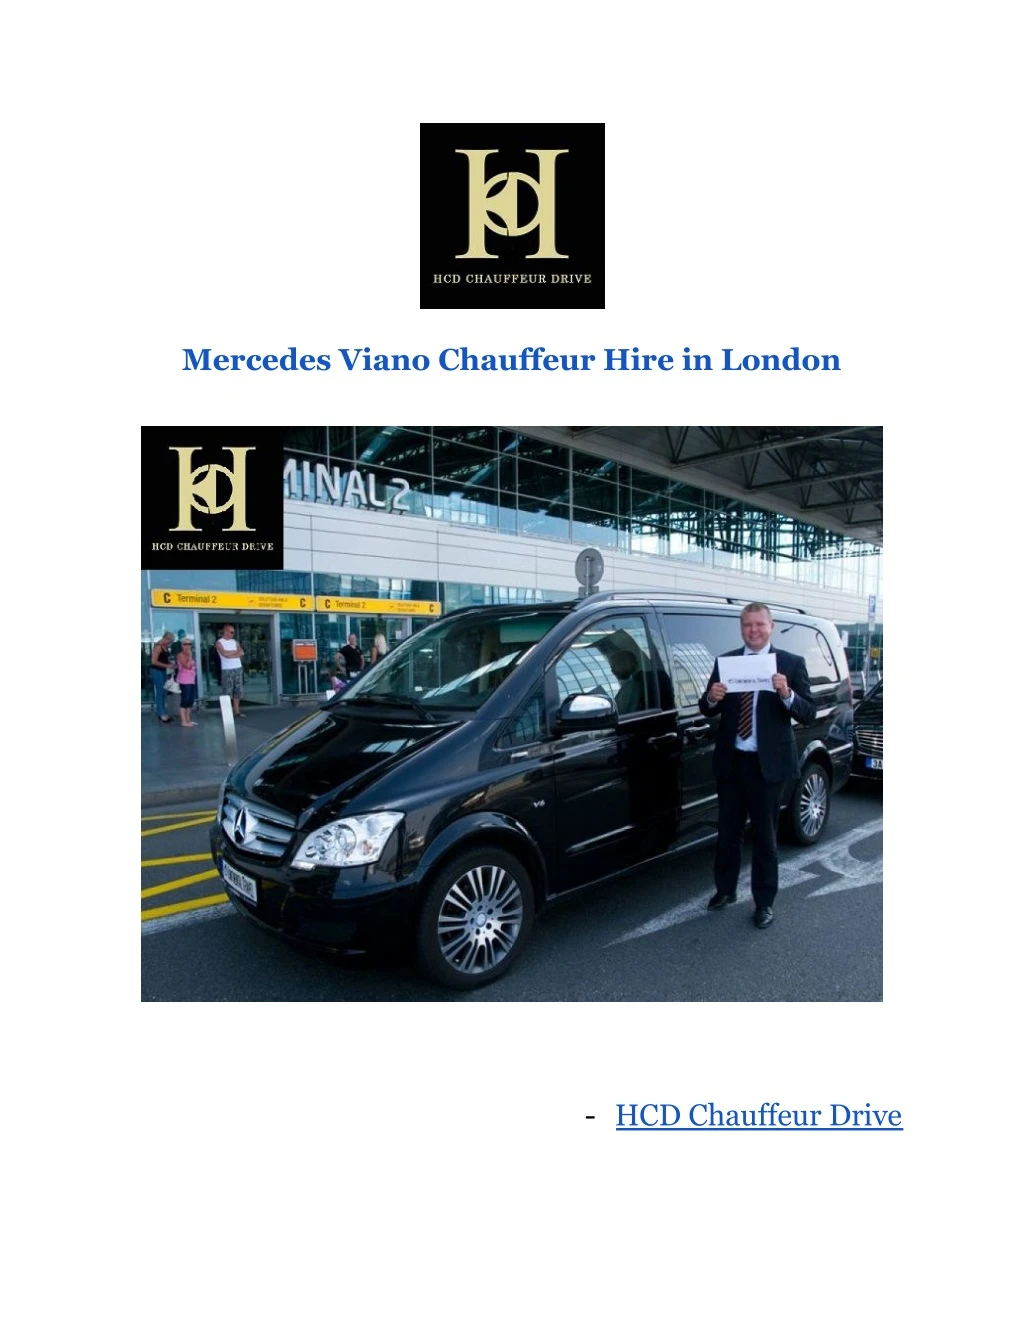 mercedes viano chauffeur hire in london